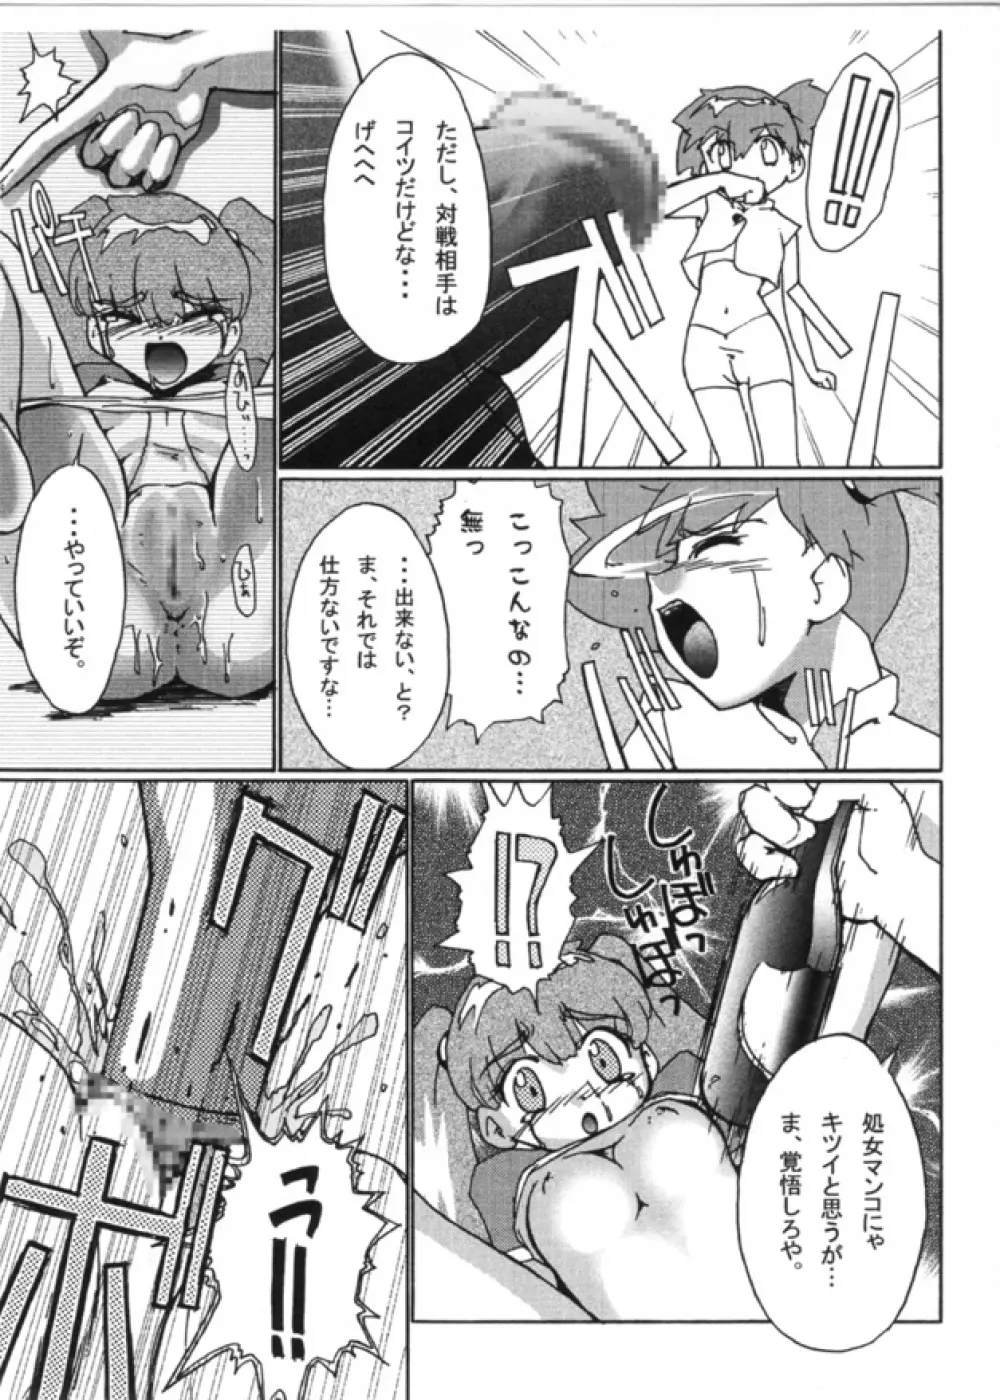 KASUMIX XPLOSION Kasumi Comic part5 - page42